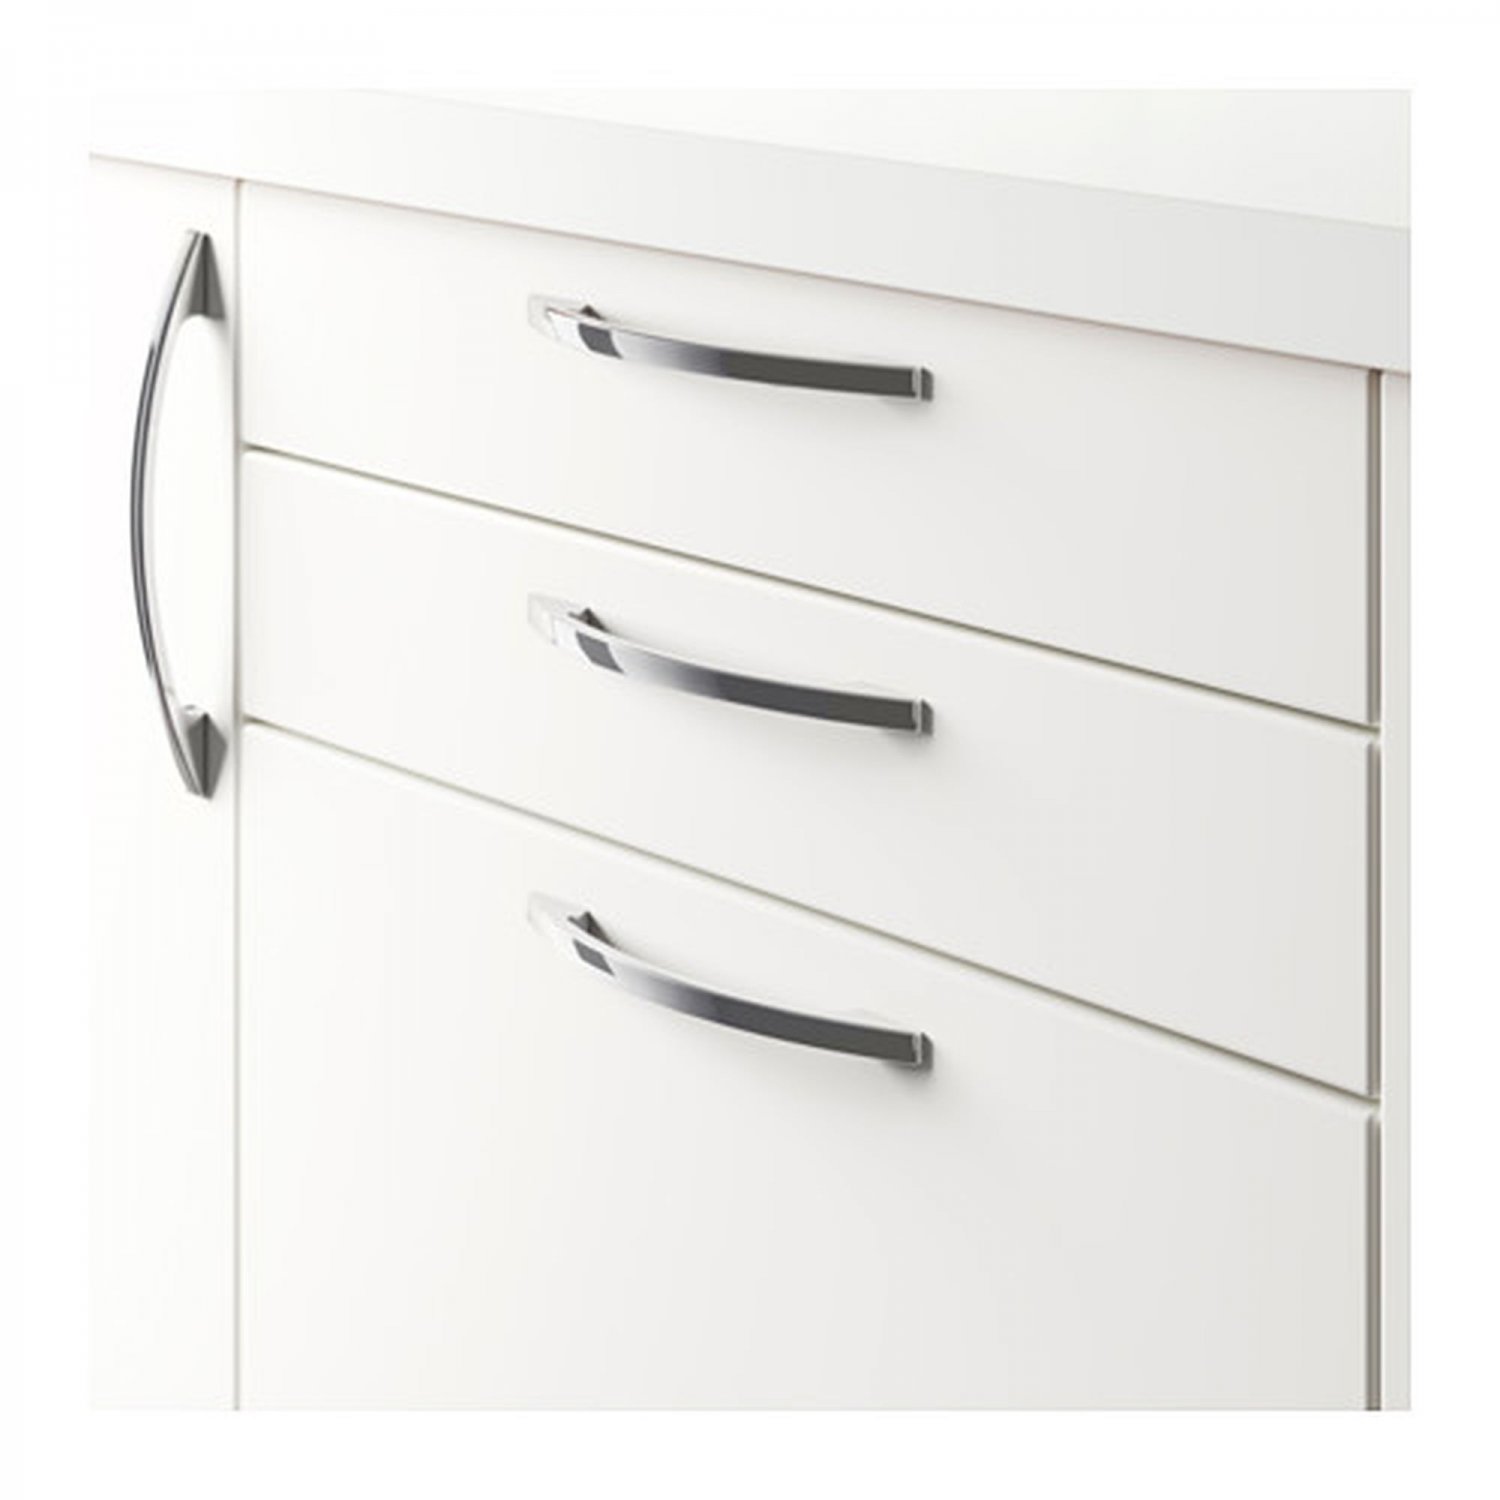 IKEA Kansli Drawer HANDLES Pulls CHROME Silver 8 1/14" 210mm